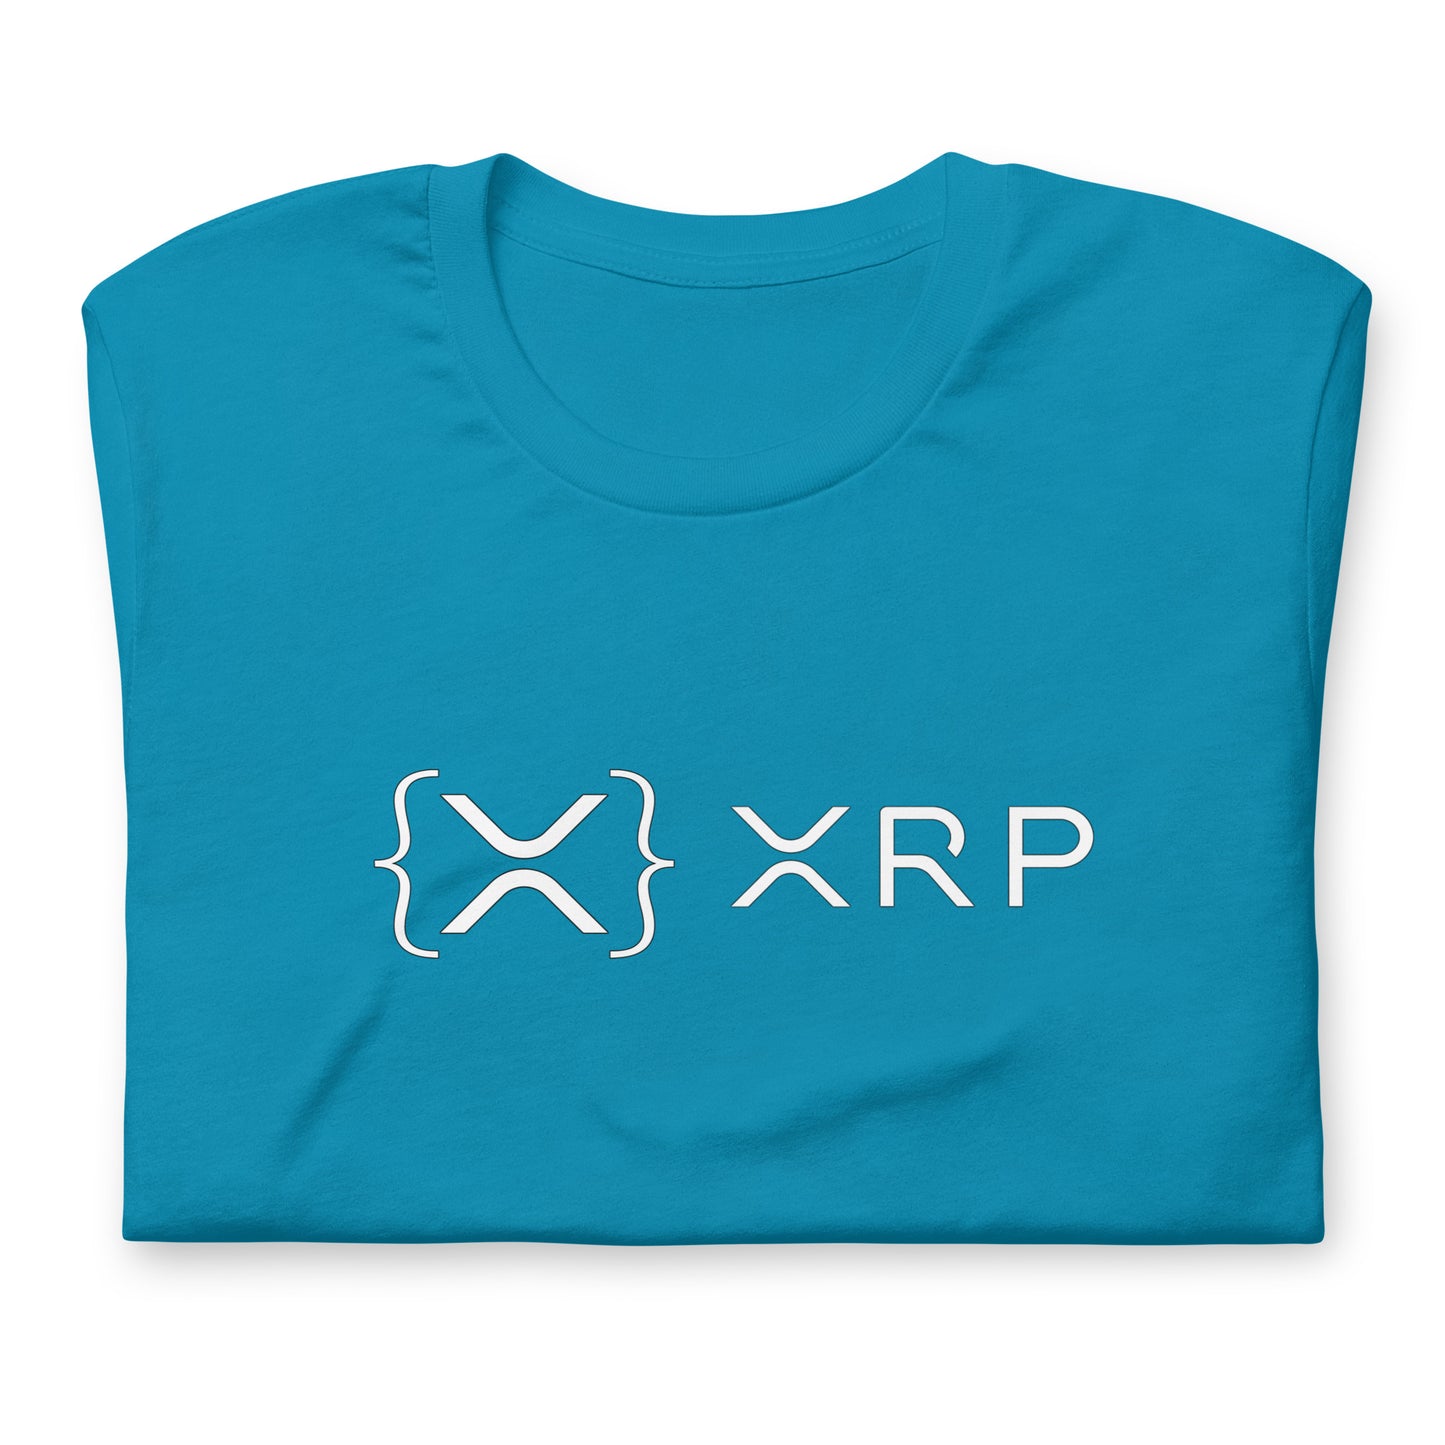 Xrp Bracket Code T-Shirt